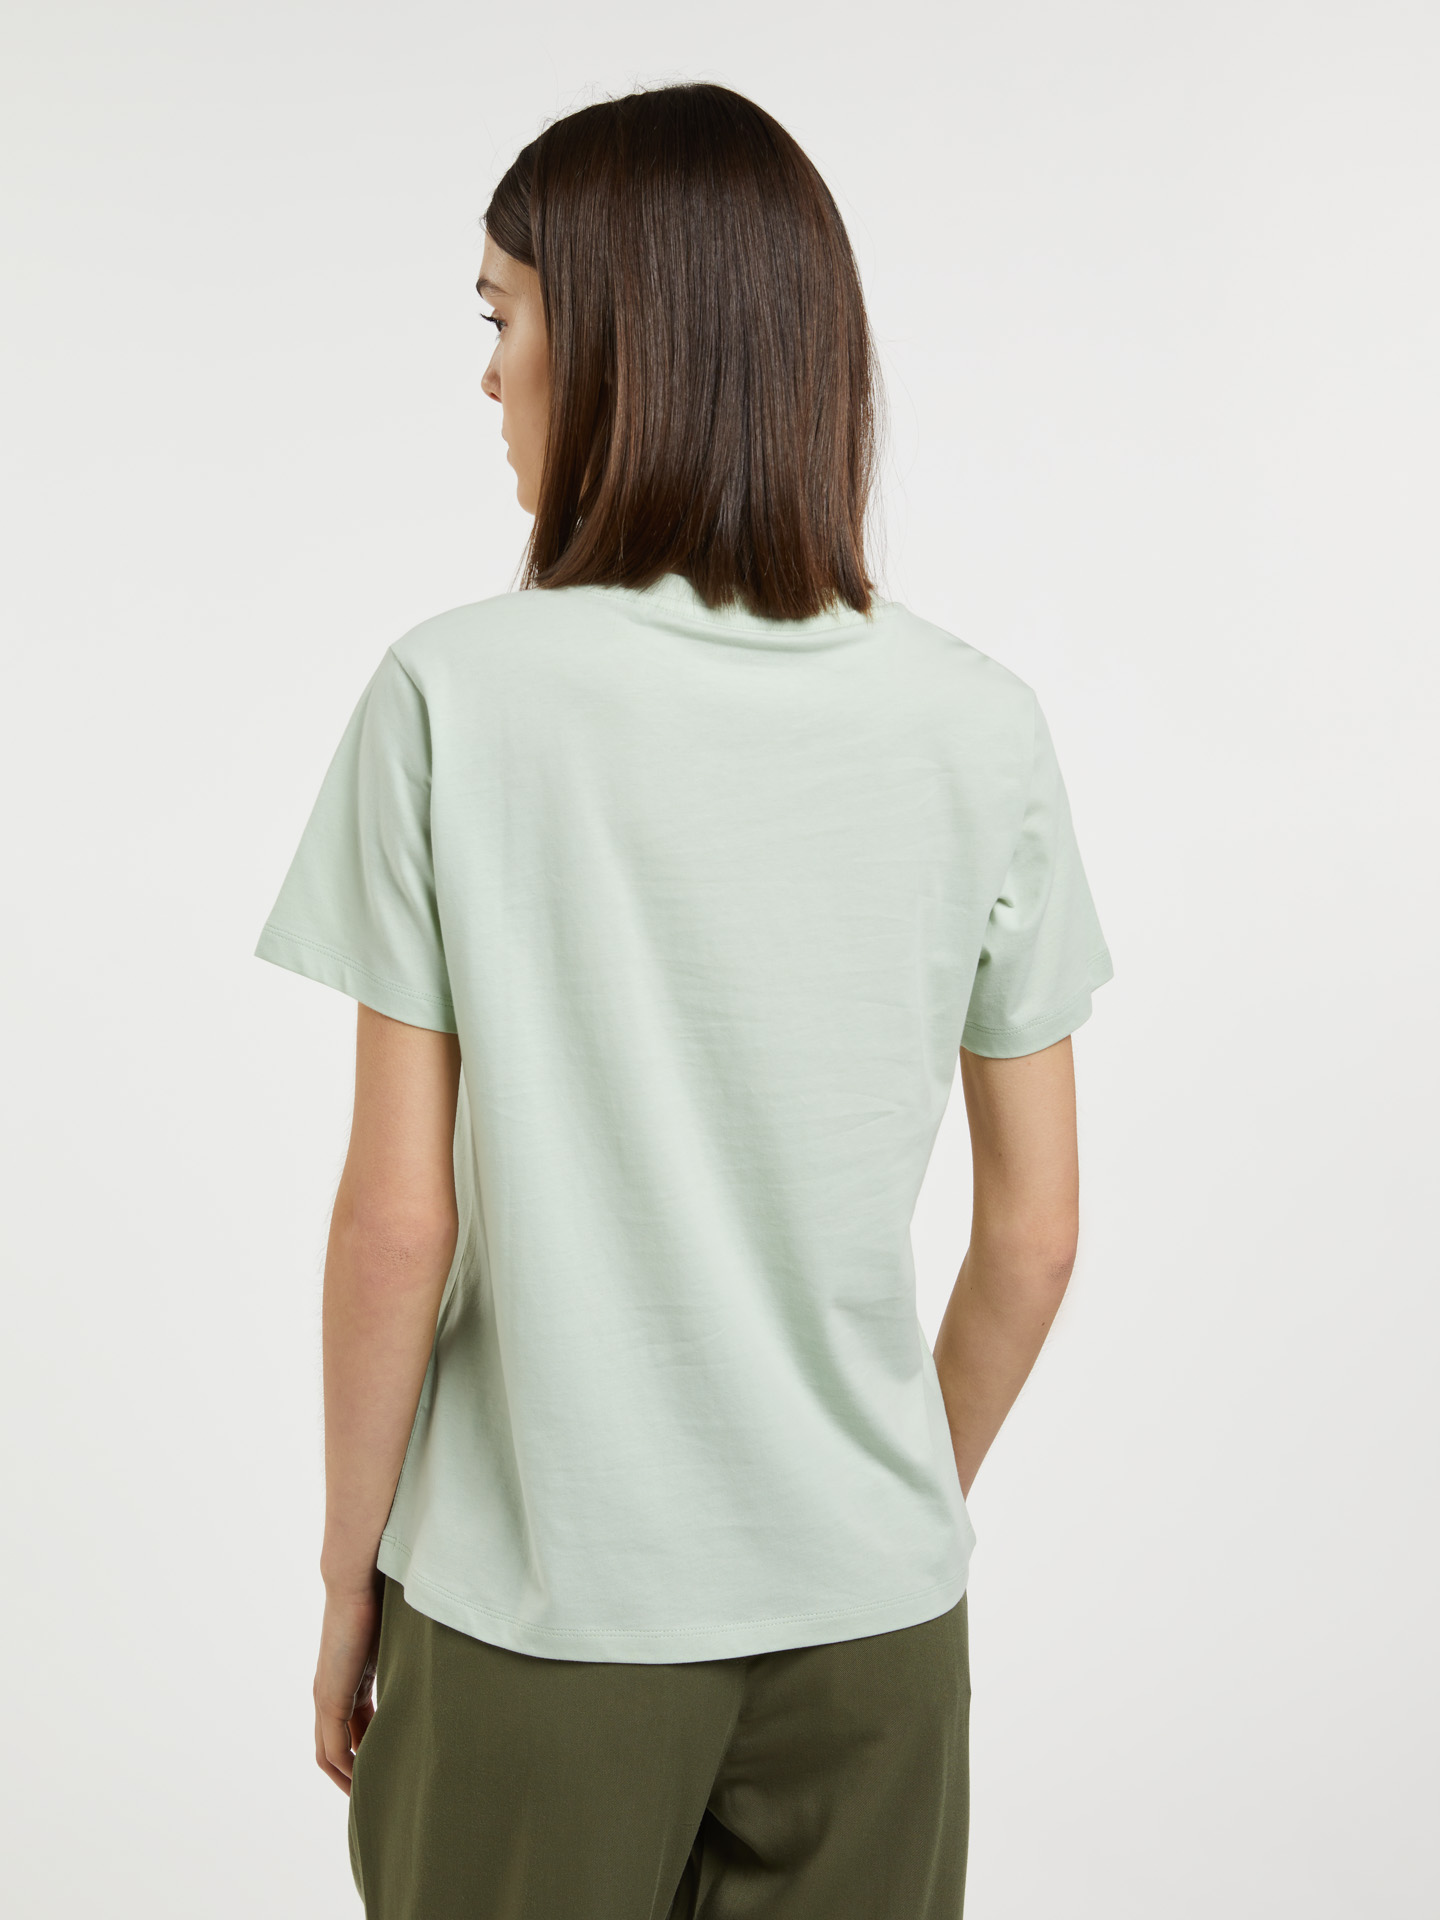 T-Shirt Light Green Casual Woman